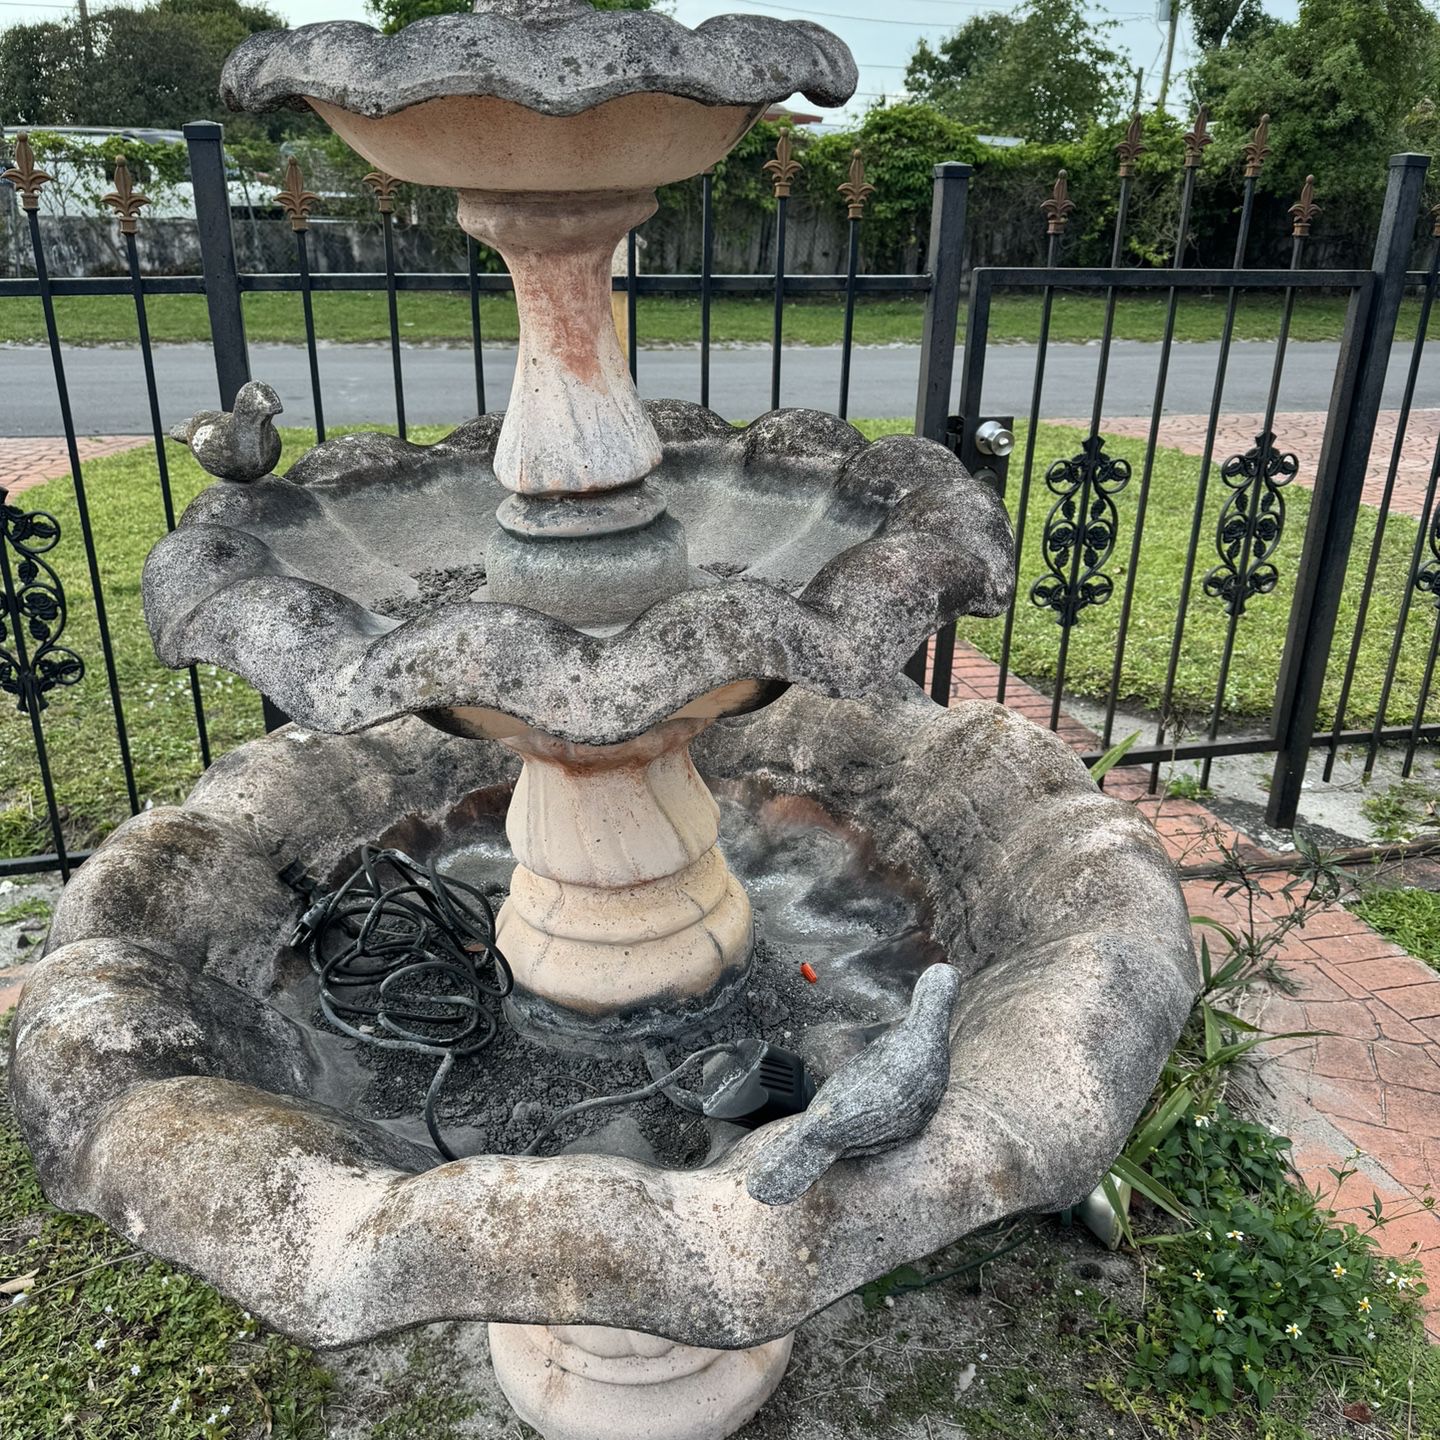 Fountain 3 Tier / 3-Tier Pineapple Outdoor Garden Patio Water Fountain in White /Fuente De Tres Pisos 